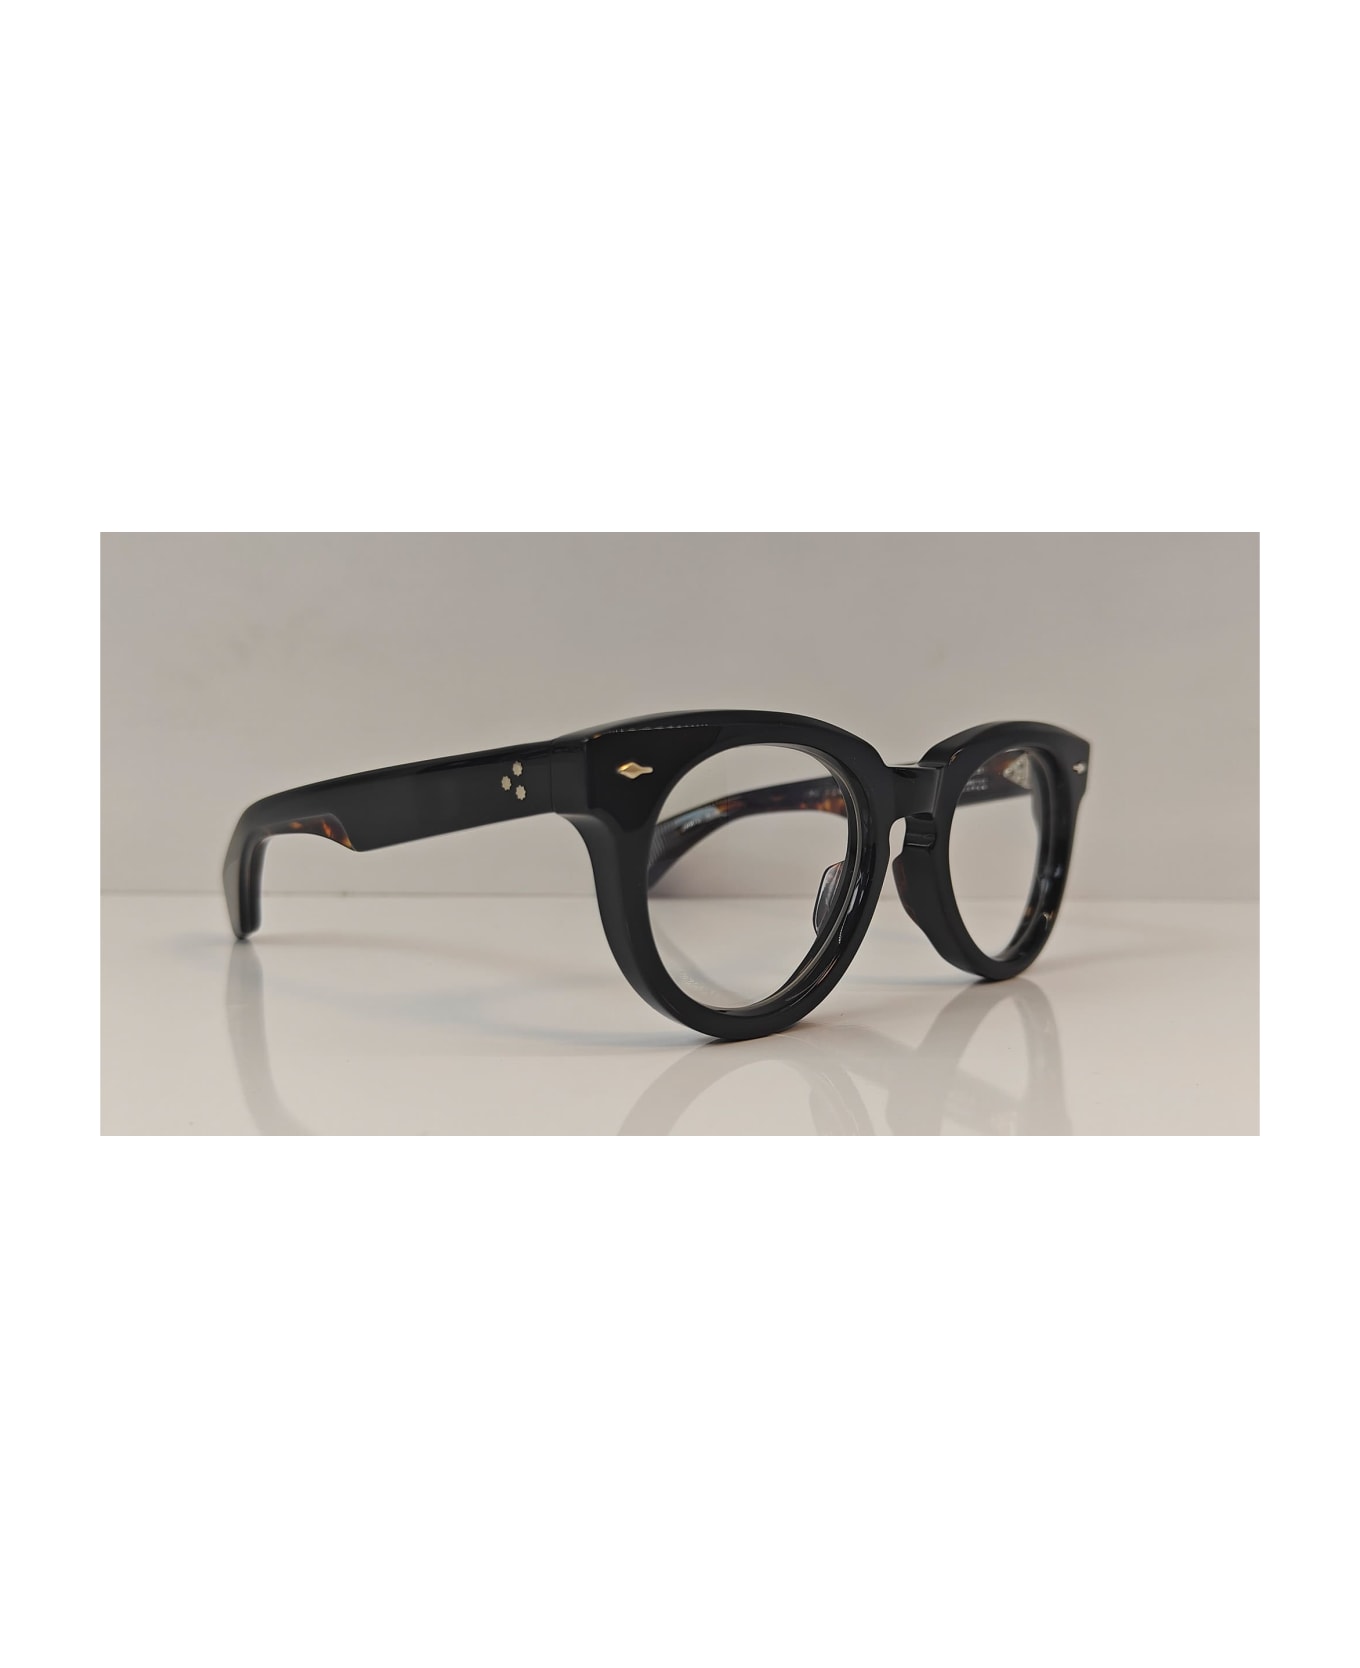 Jacques Marie Mage Fontainebleau 2 - Noir 7 Rx Glasses - black/silver アイウェア